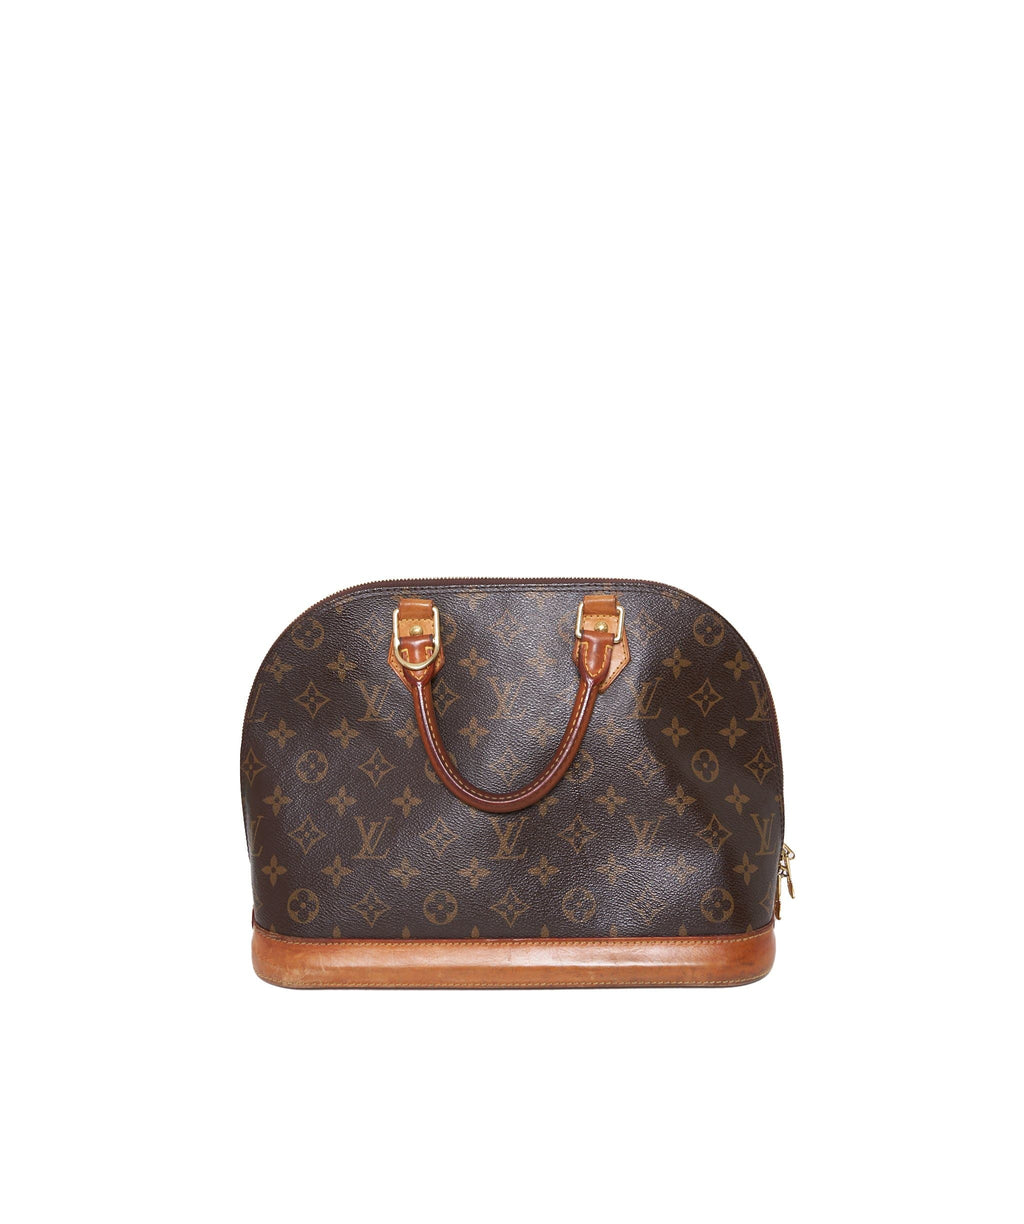 Brown Louis Vuitton Monogram Alma MM Handbag